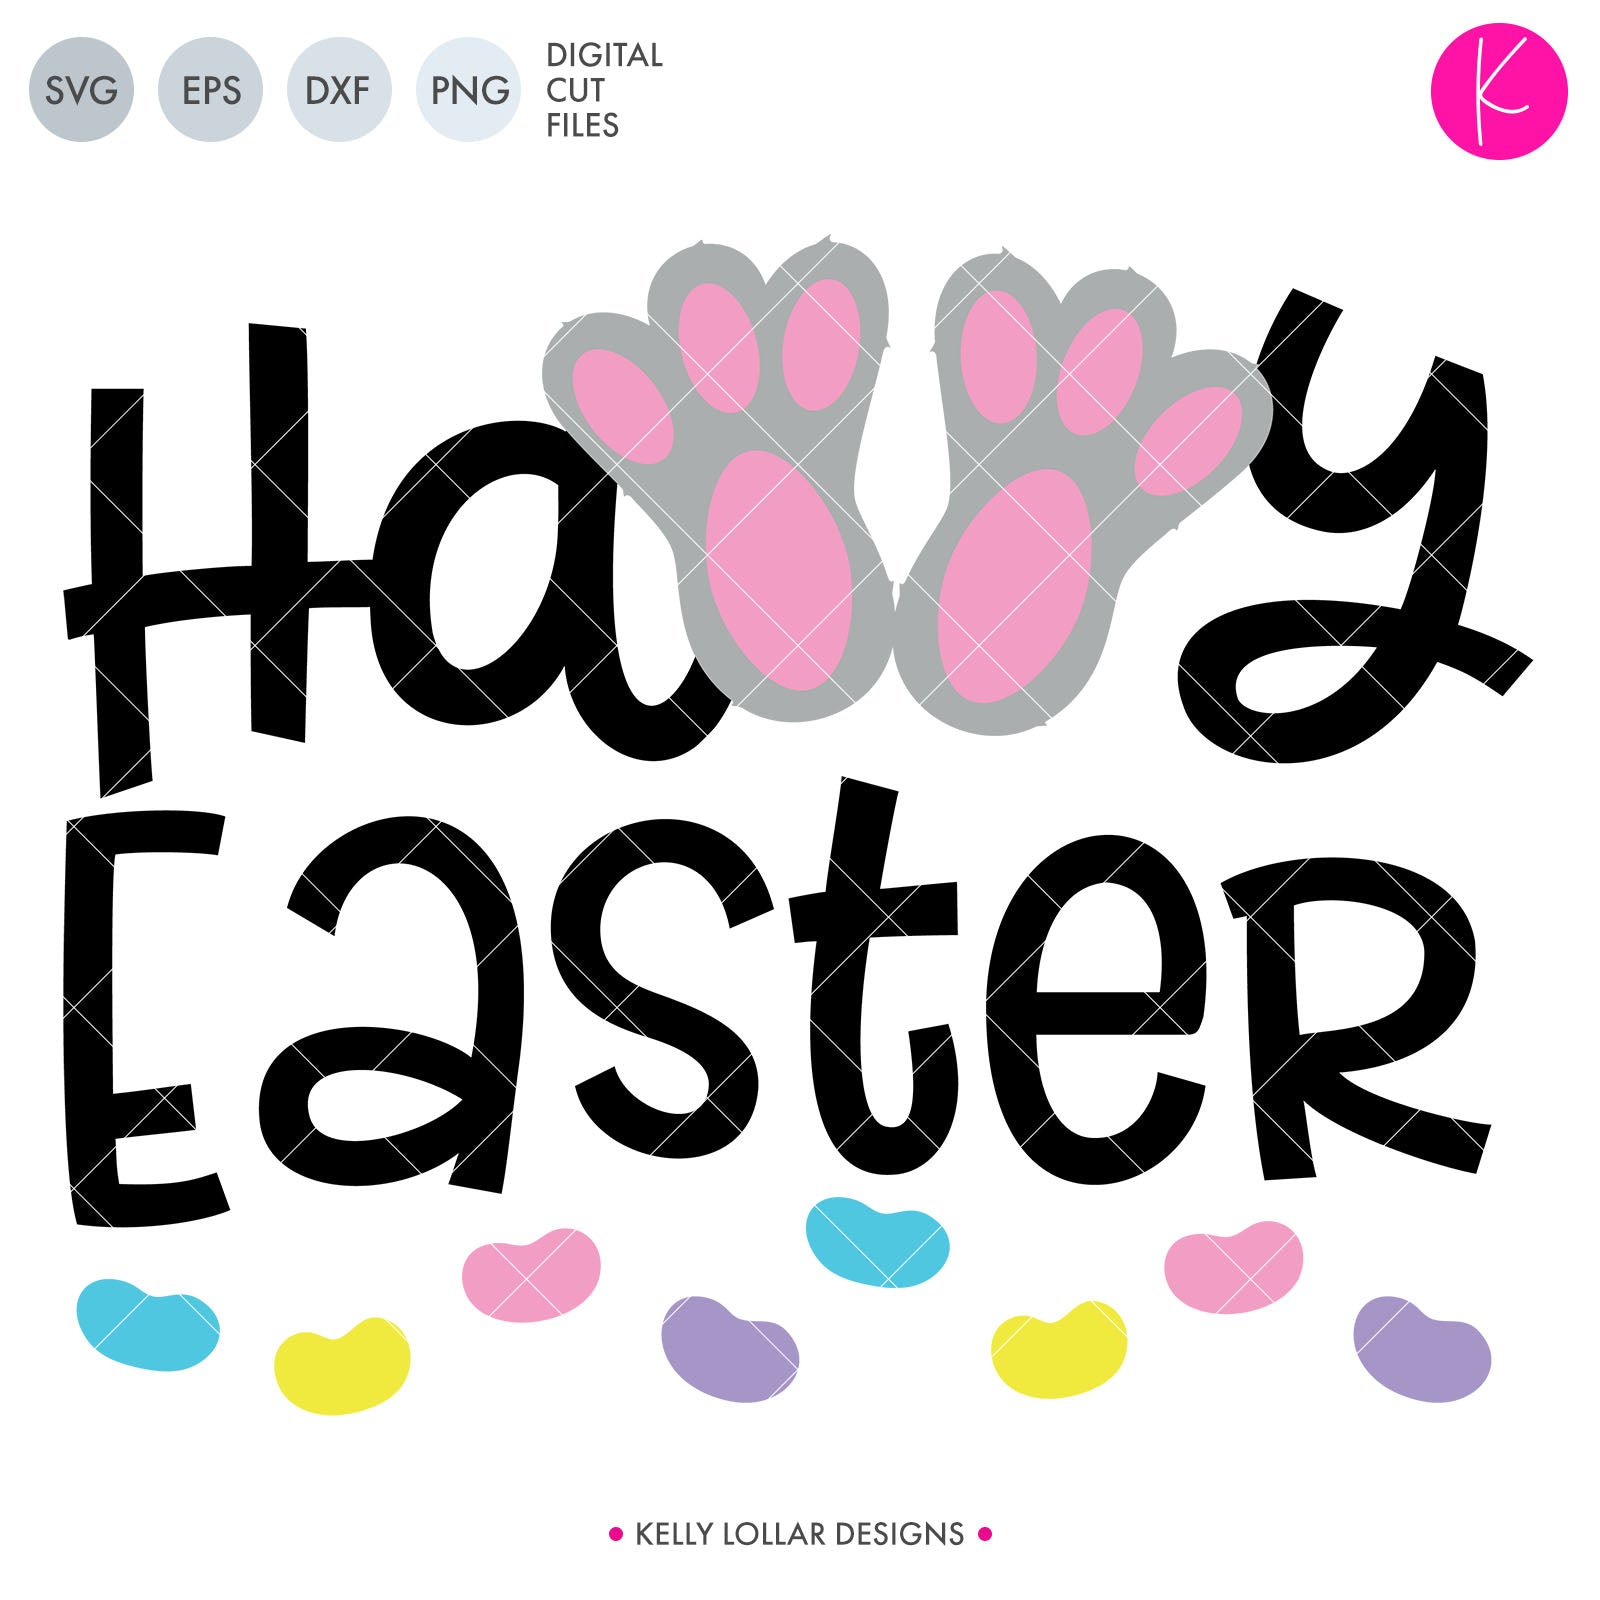 Download Seasonal Svg Dxf Eps Png Cut Files Kelly Lollar Designs Tagged Bunny Feet